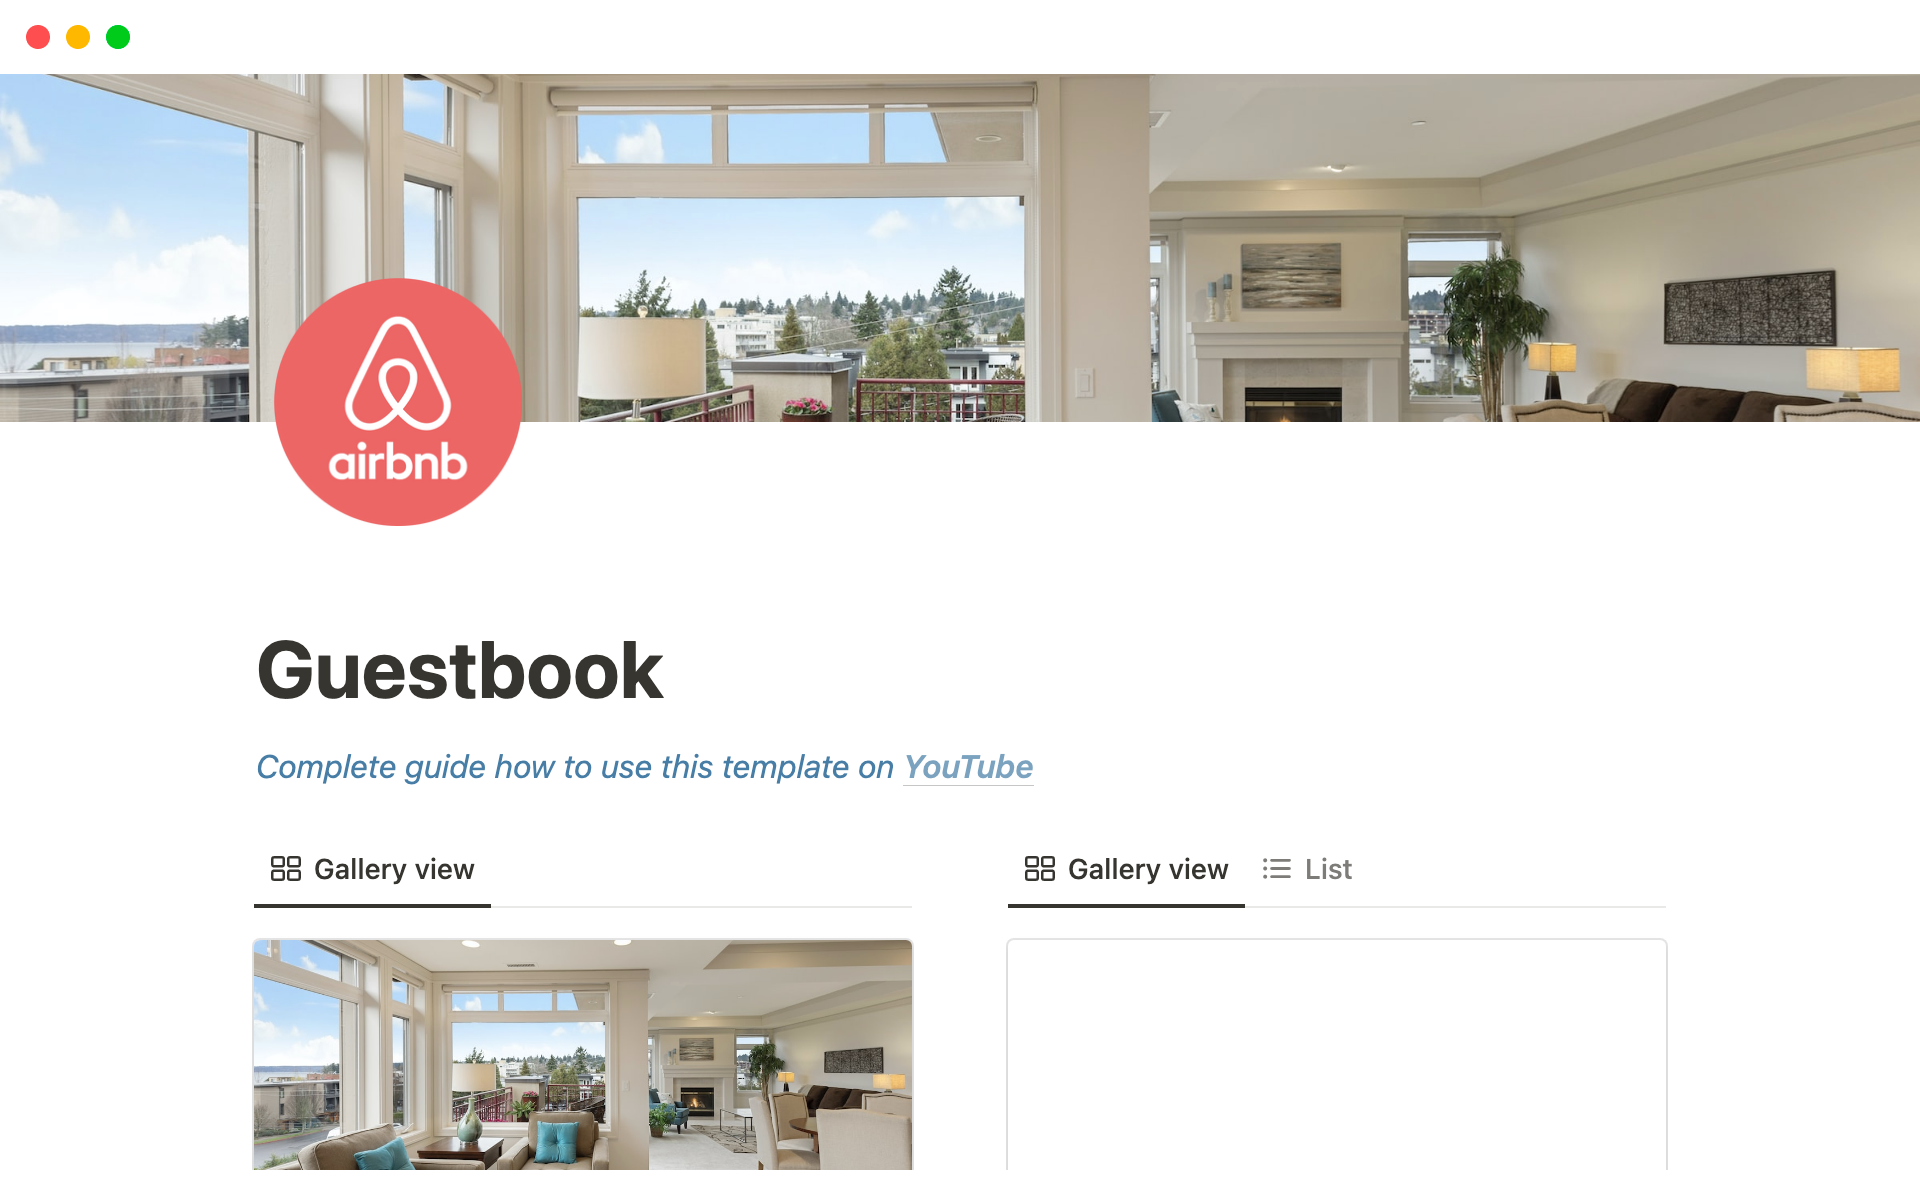 Ultimate Airbnb Guestbook님의 템플릿 미리보기